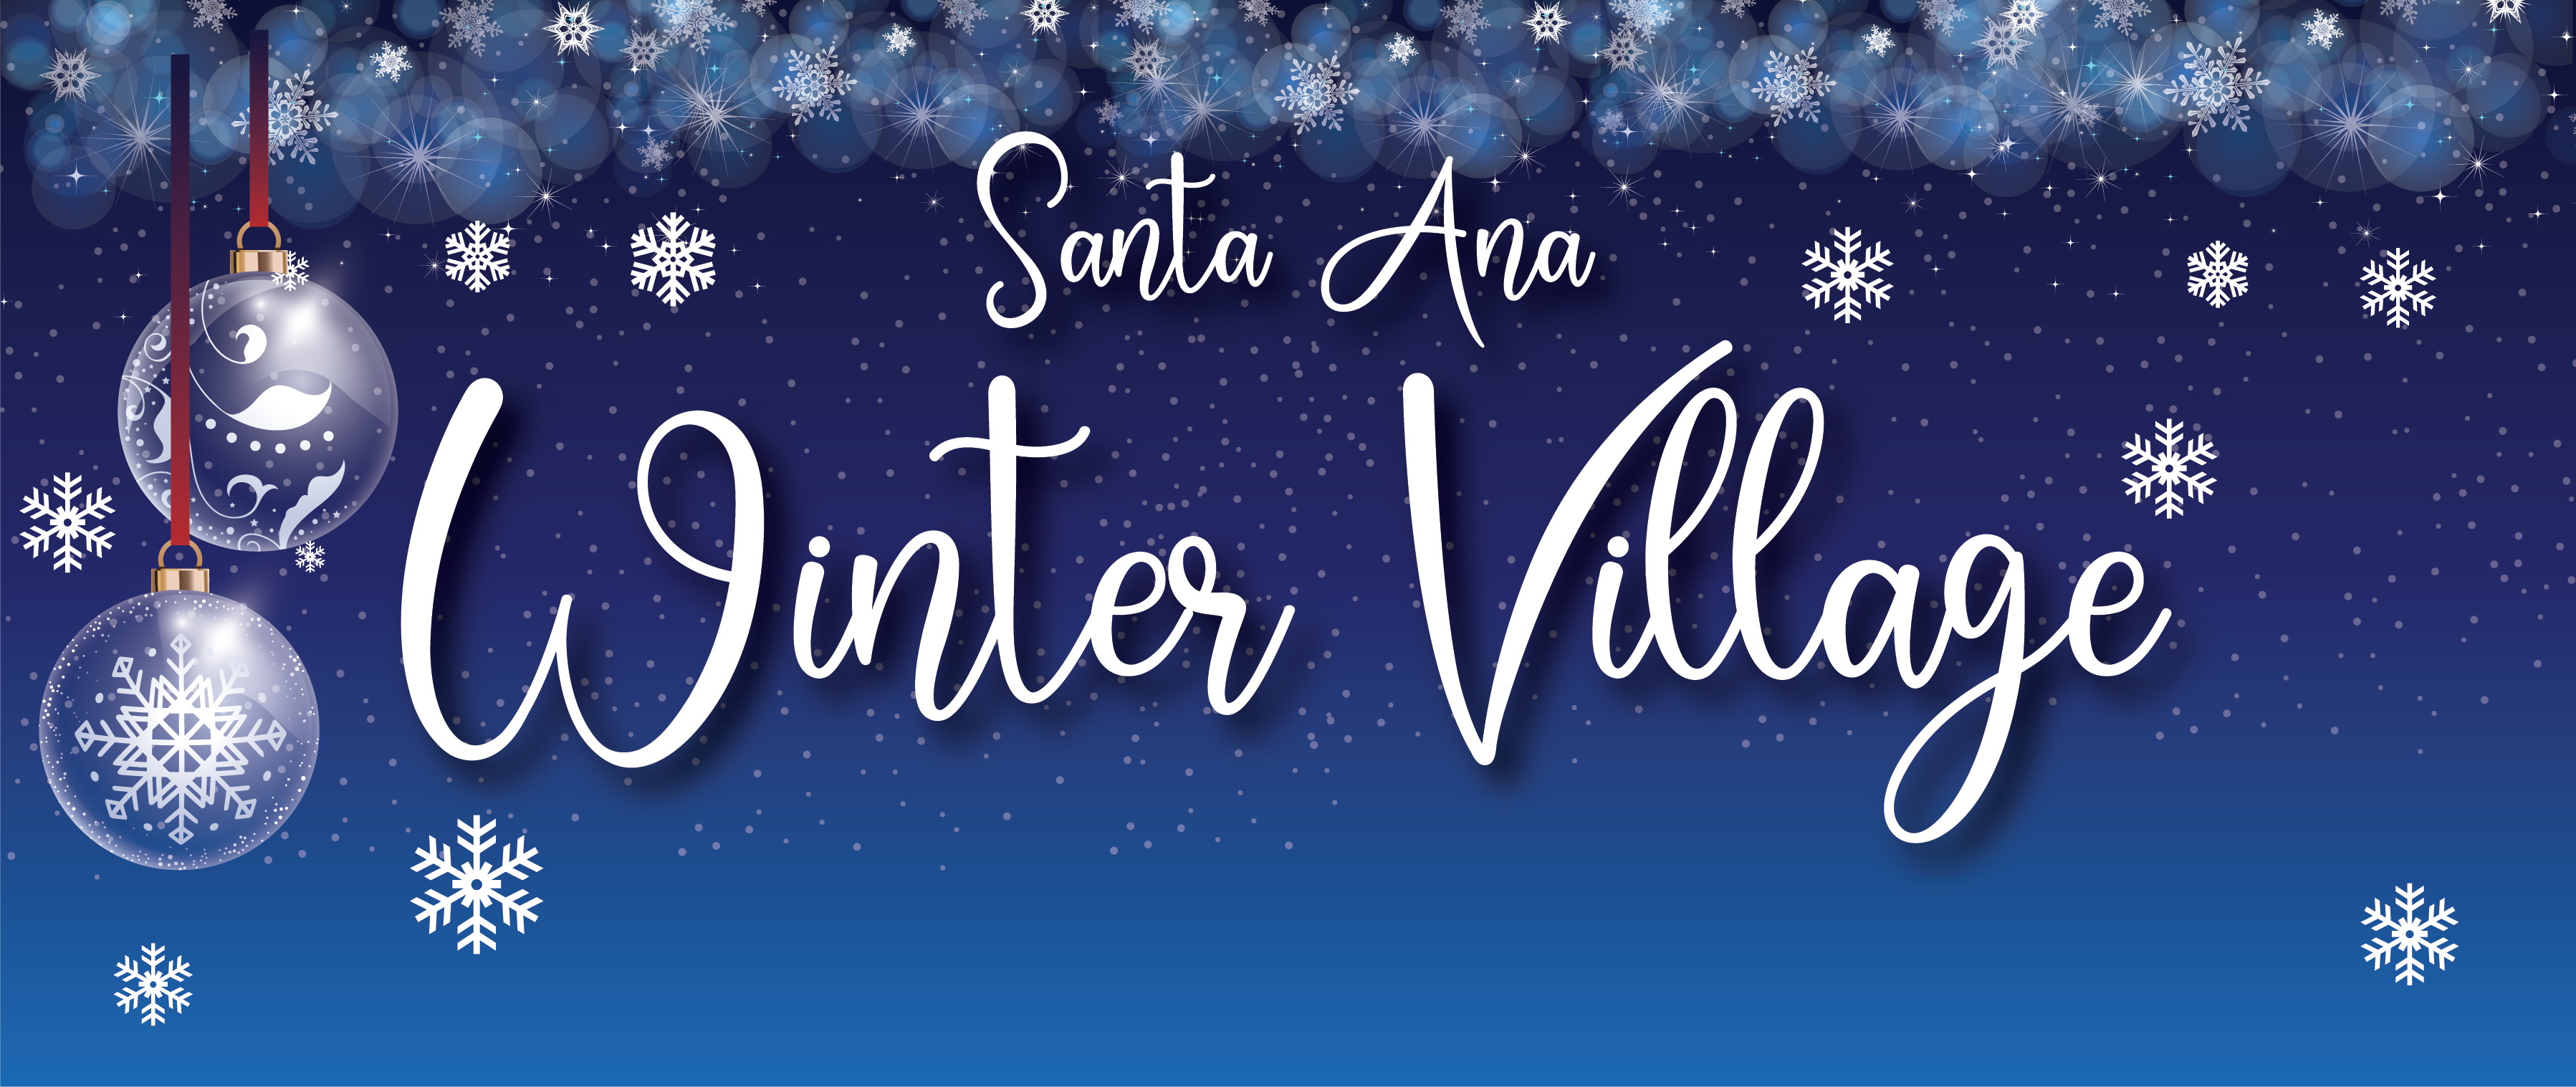 Santa Ana Winter Village title image